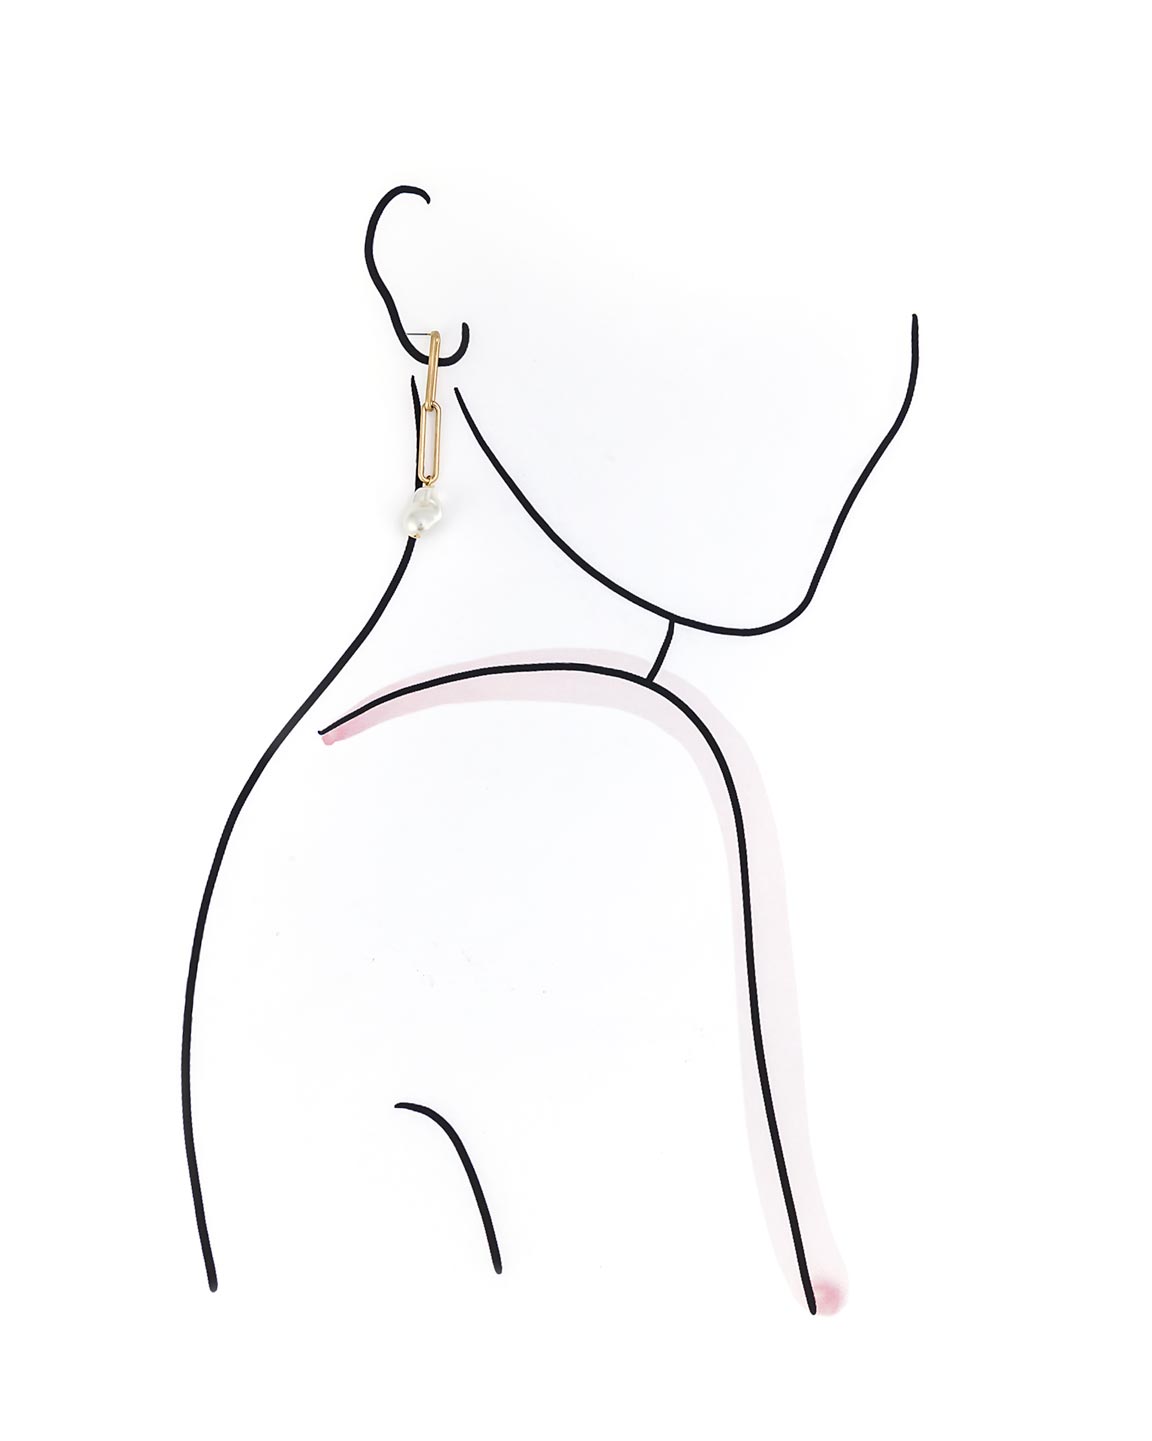 Dauplaise Jewelry - Linear Pearl Statement Earrings